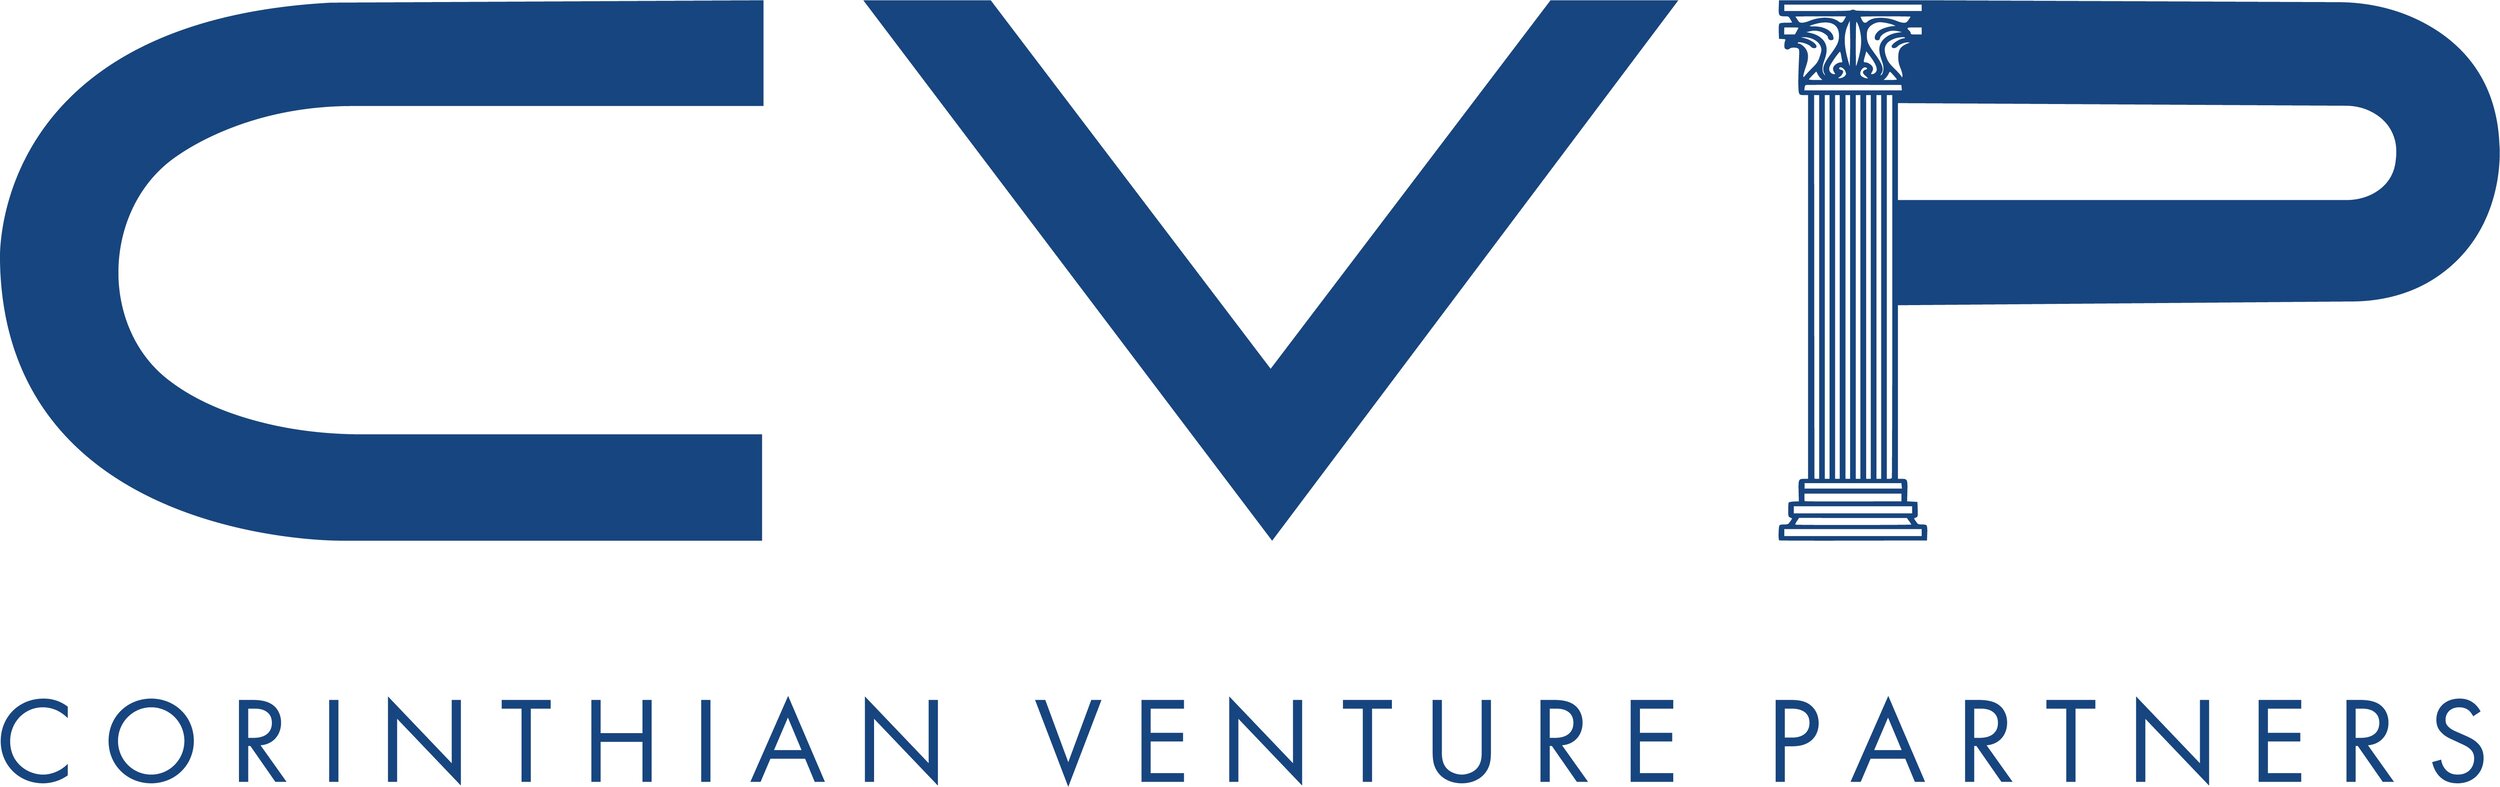 Corinthian Venture Partners_Logo_Blå.jpg